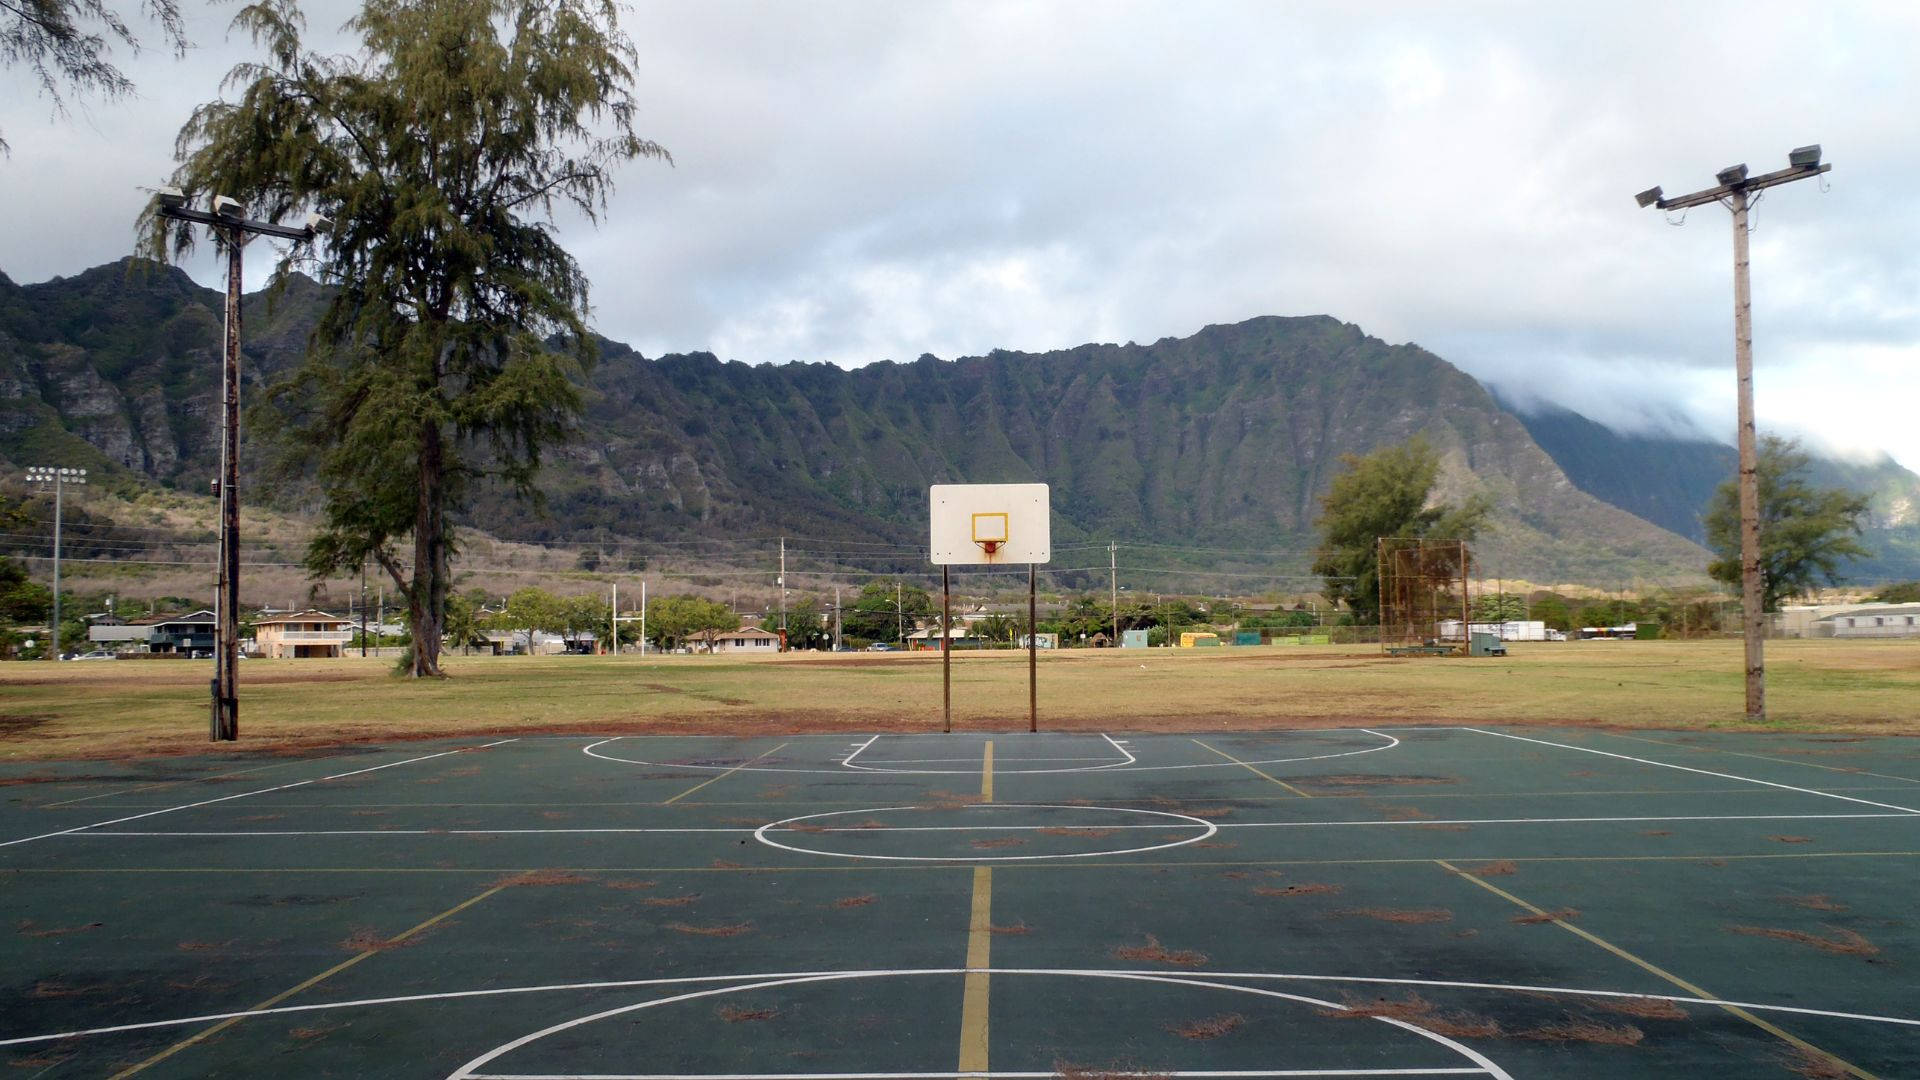 Waimanalo Basketball Court Mountain View: Waimanalo Basketball Court Mountain View Wallpaper